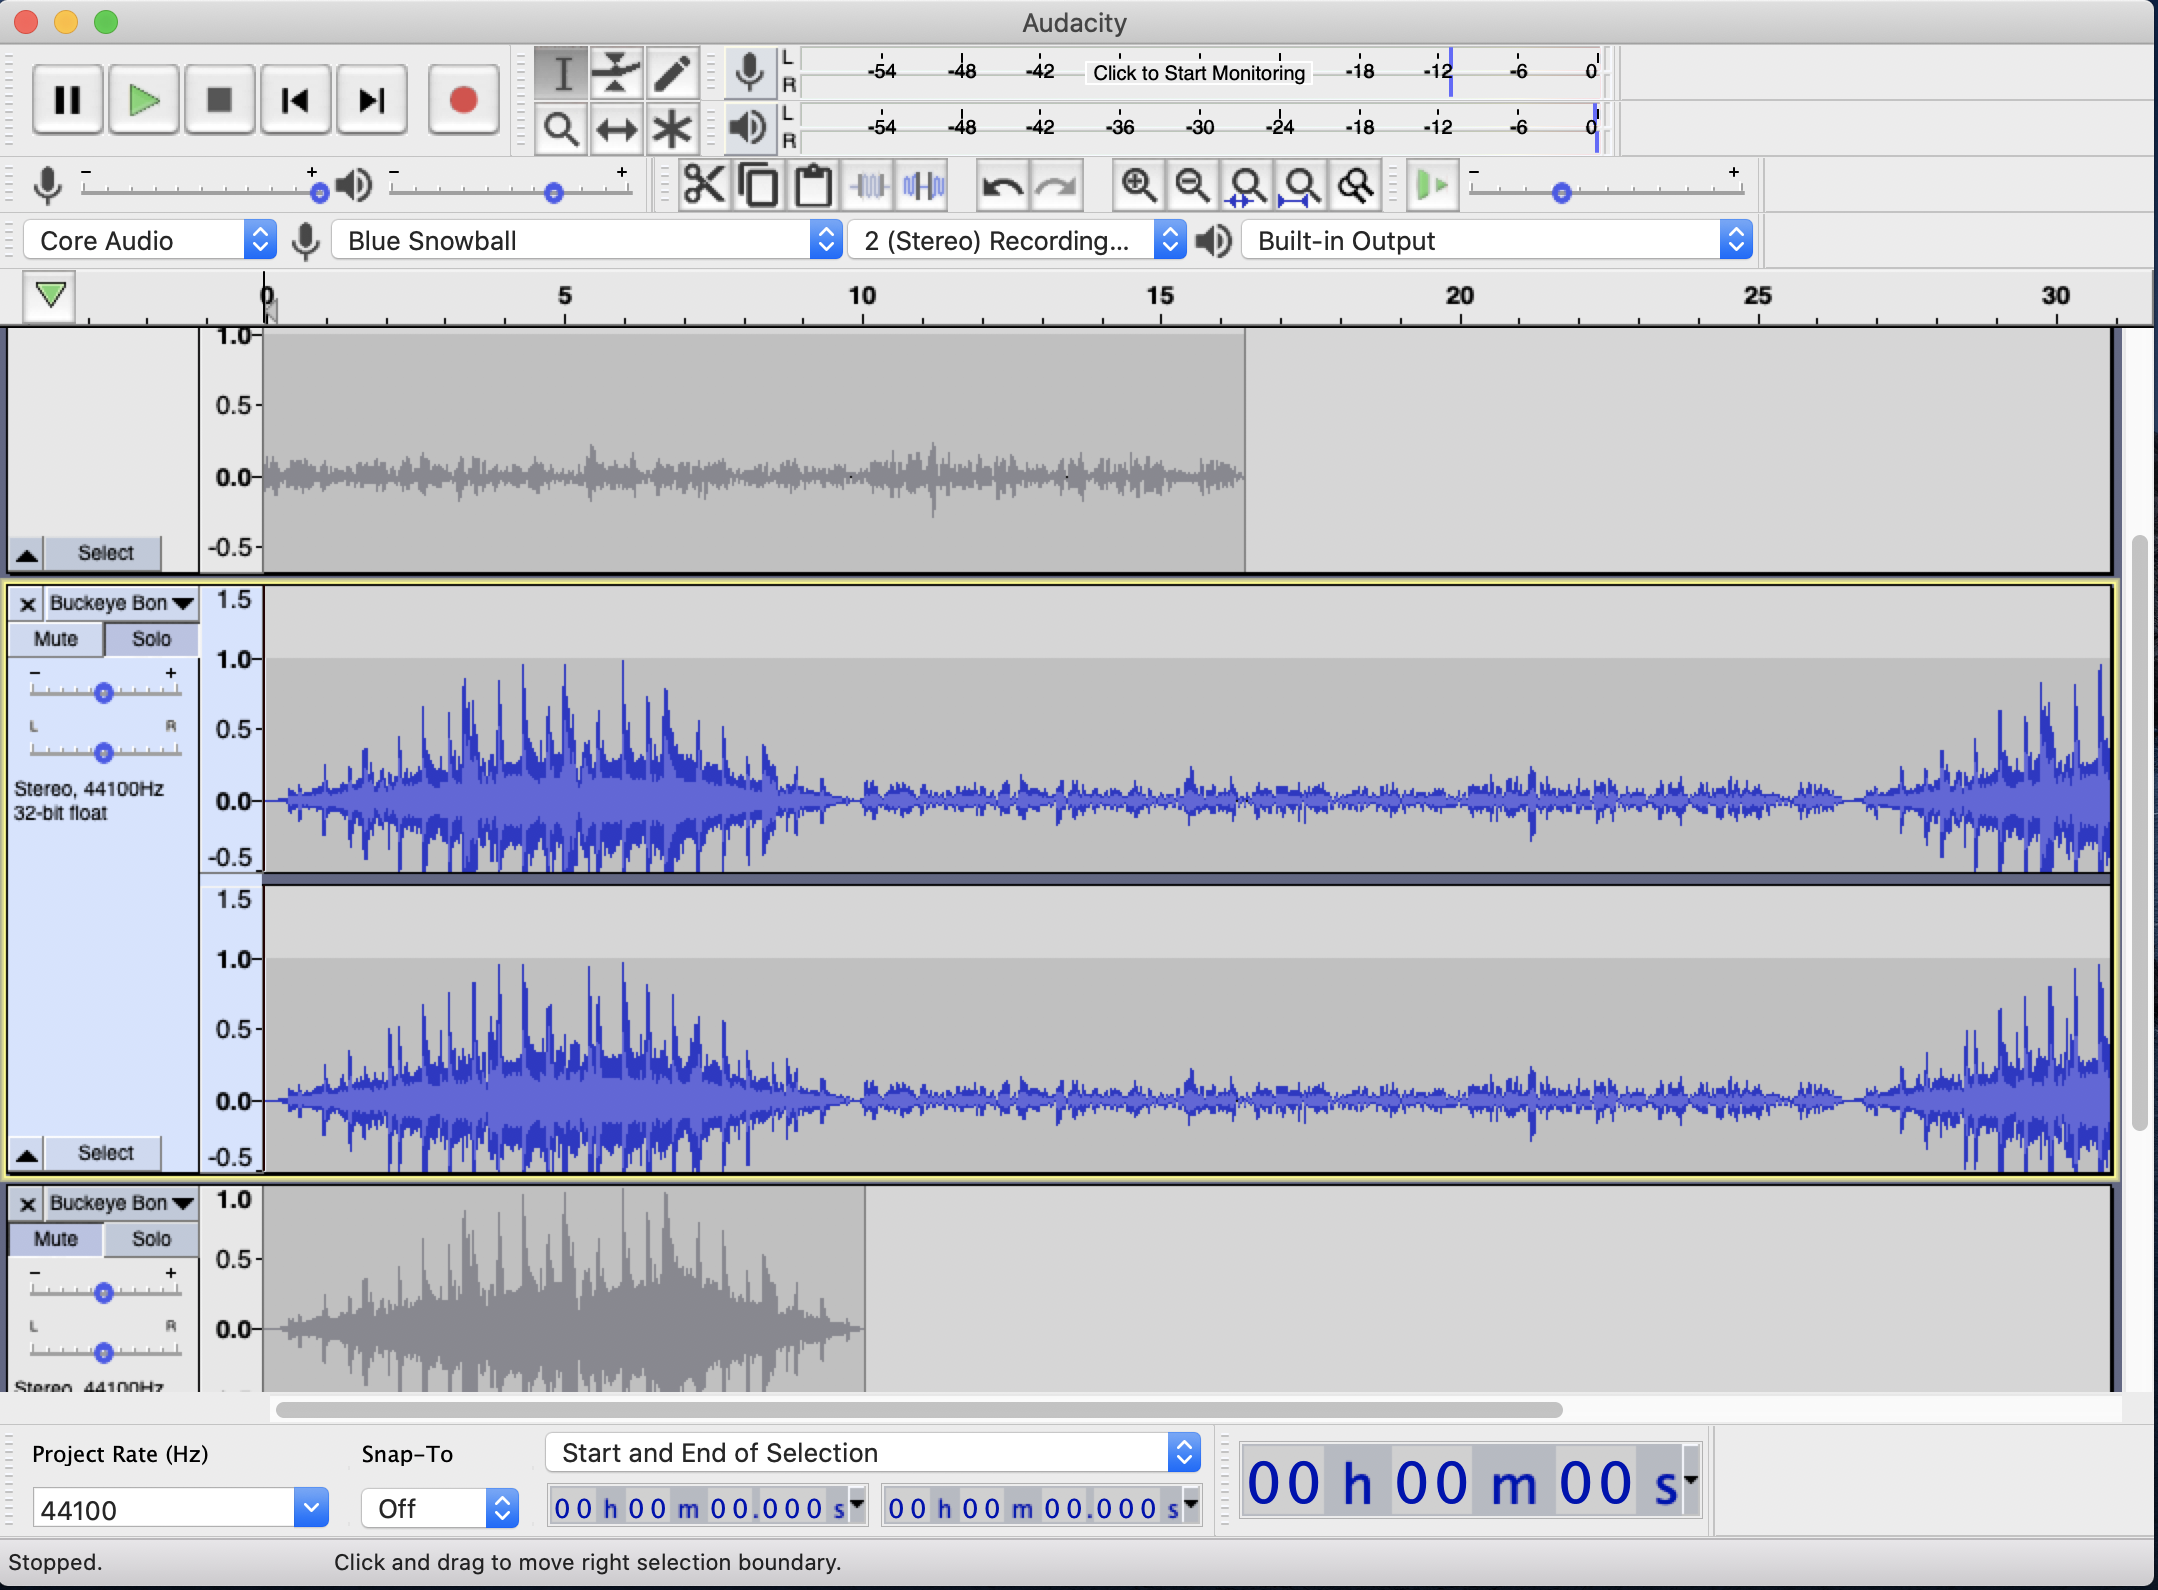 Audacity window with three audio tracks